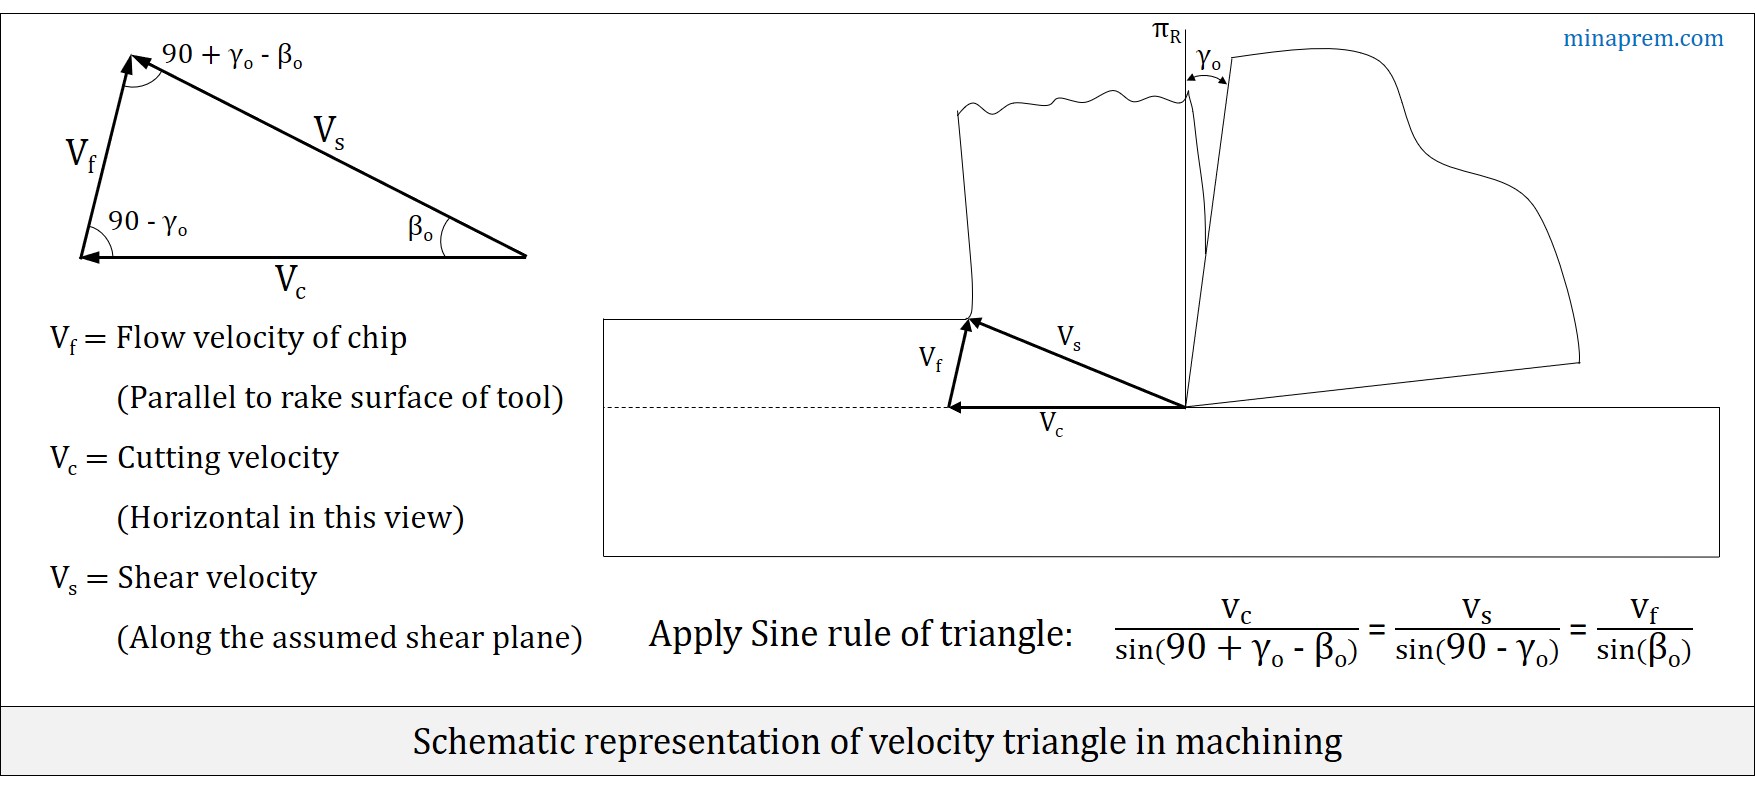 Schematic representation of velocity triangle in machining